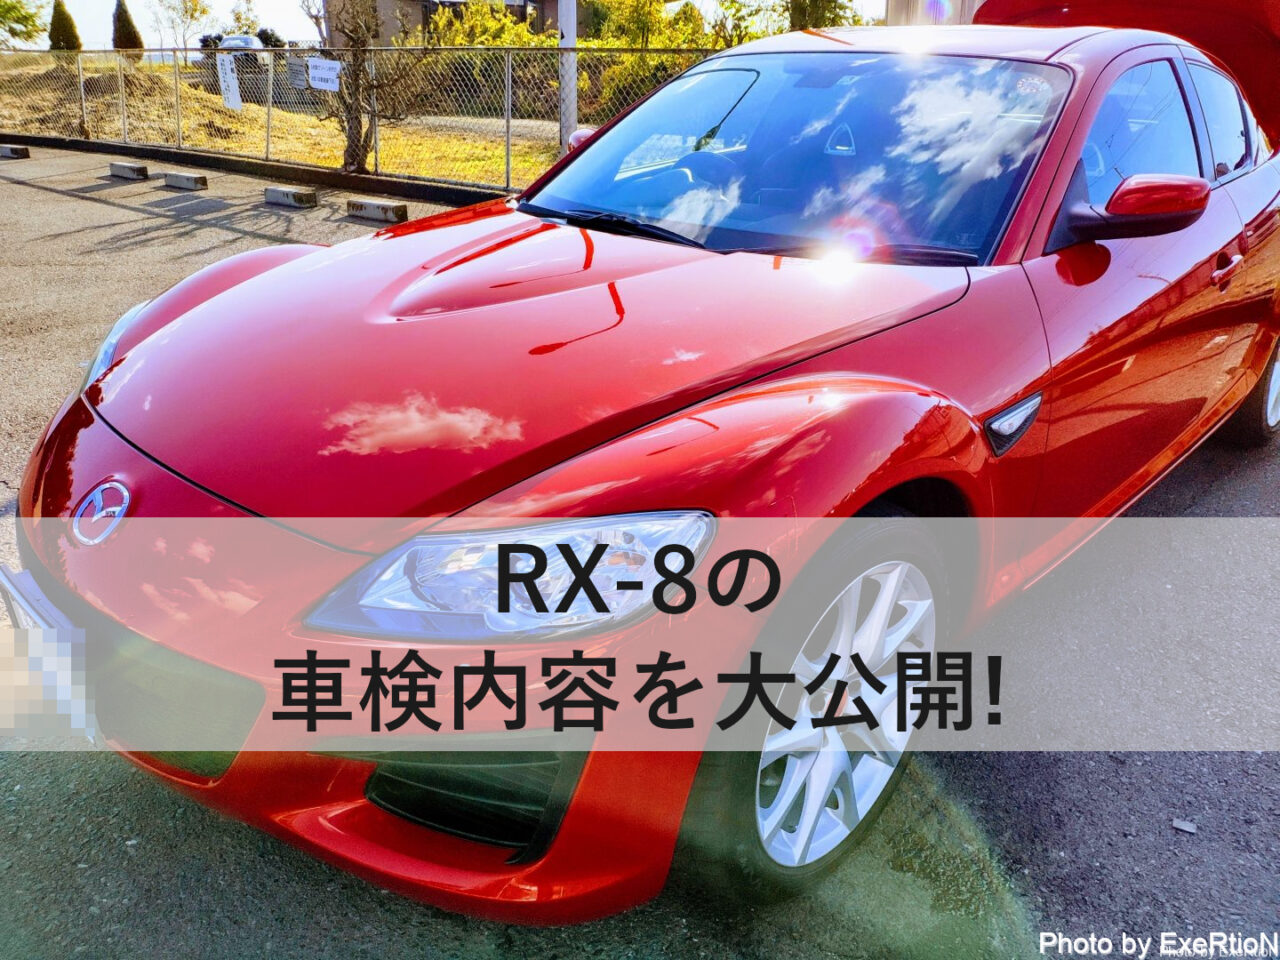 RX-8の車検 費用と整備内容を公開【初年度登録11年目】 ExeRtioN 